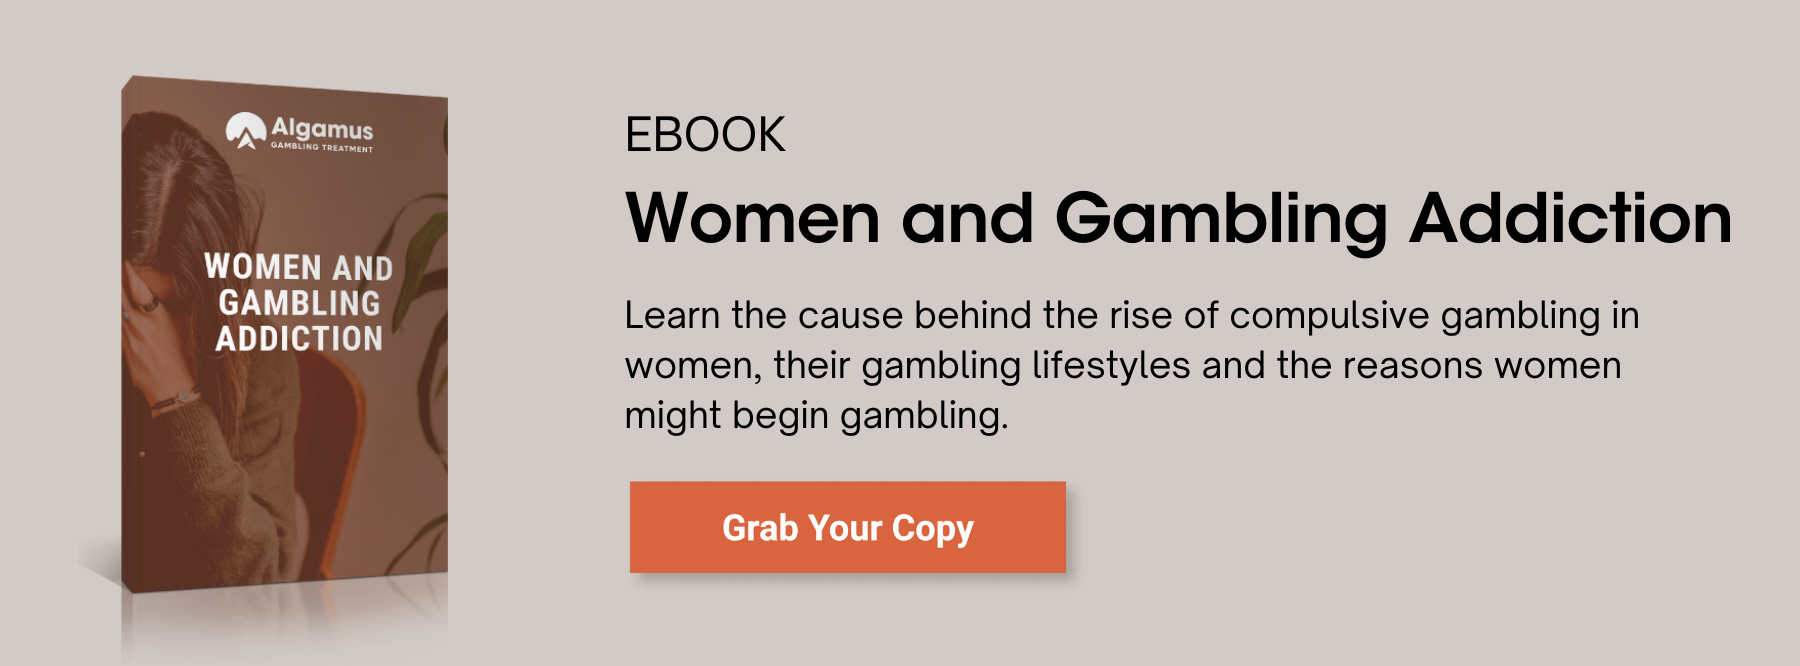 Women and Gambling Addiction eBook